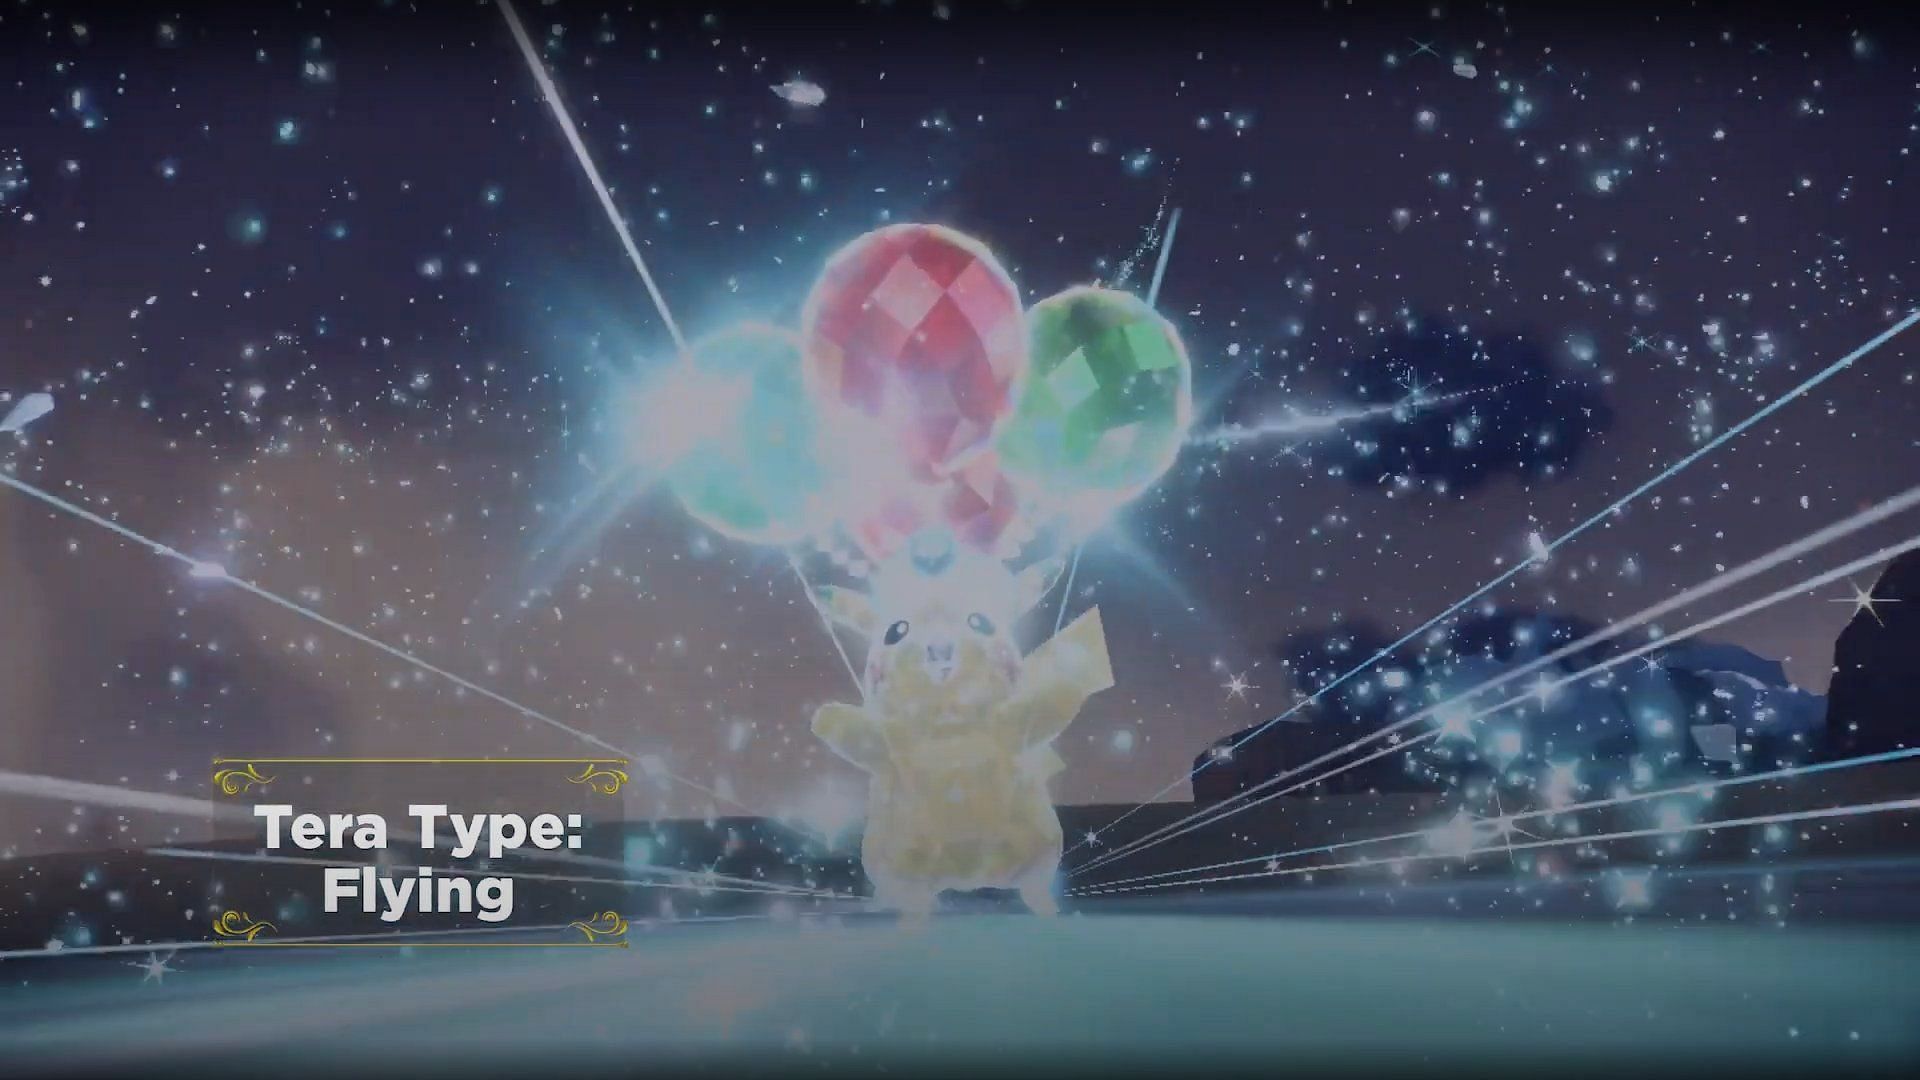 This Pikachu has a Flying Tera Type (Image via Game Freak)